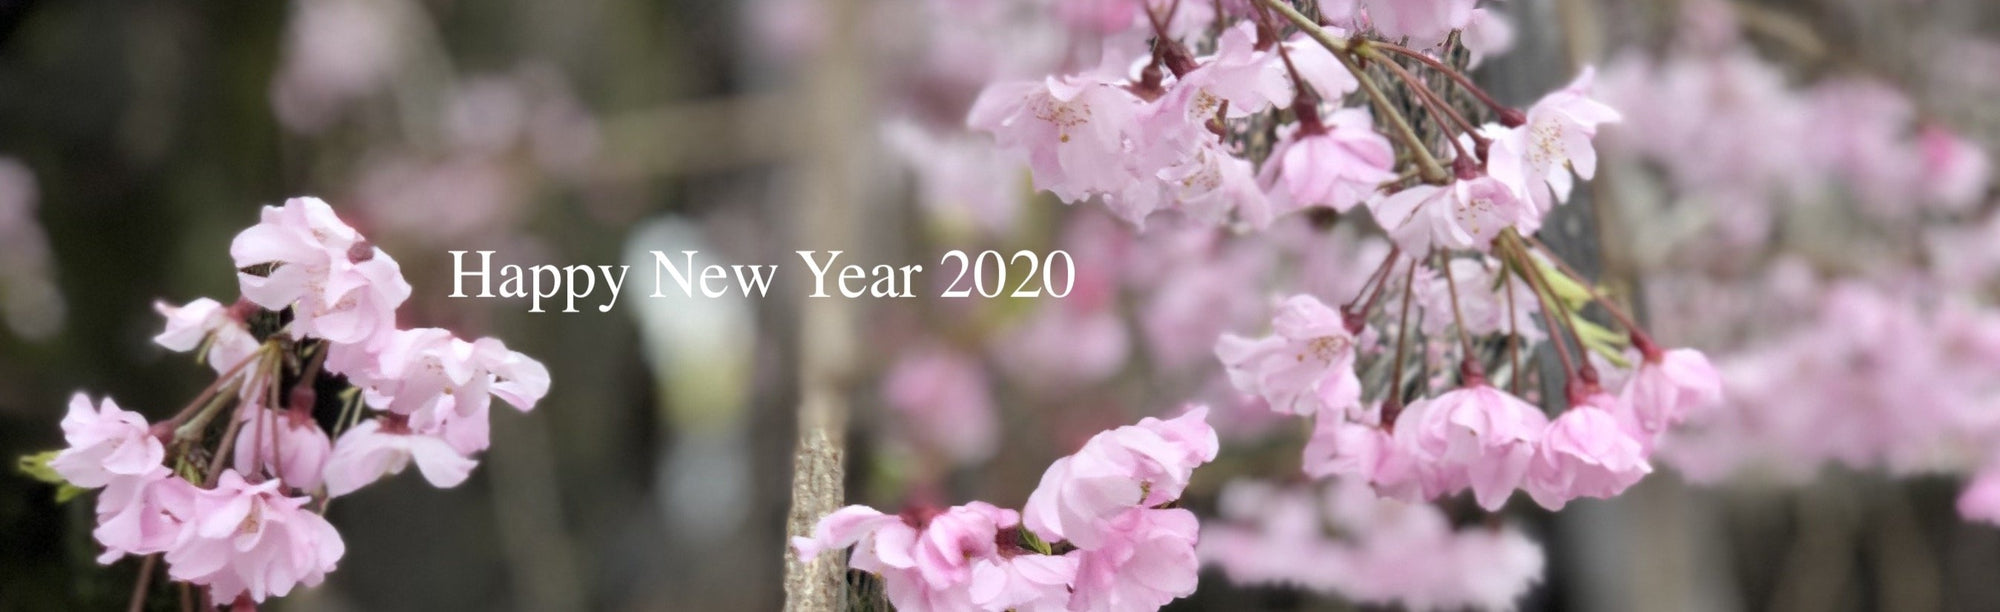 Theme: Happy New Year 2020